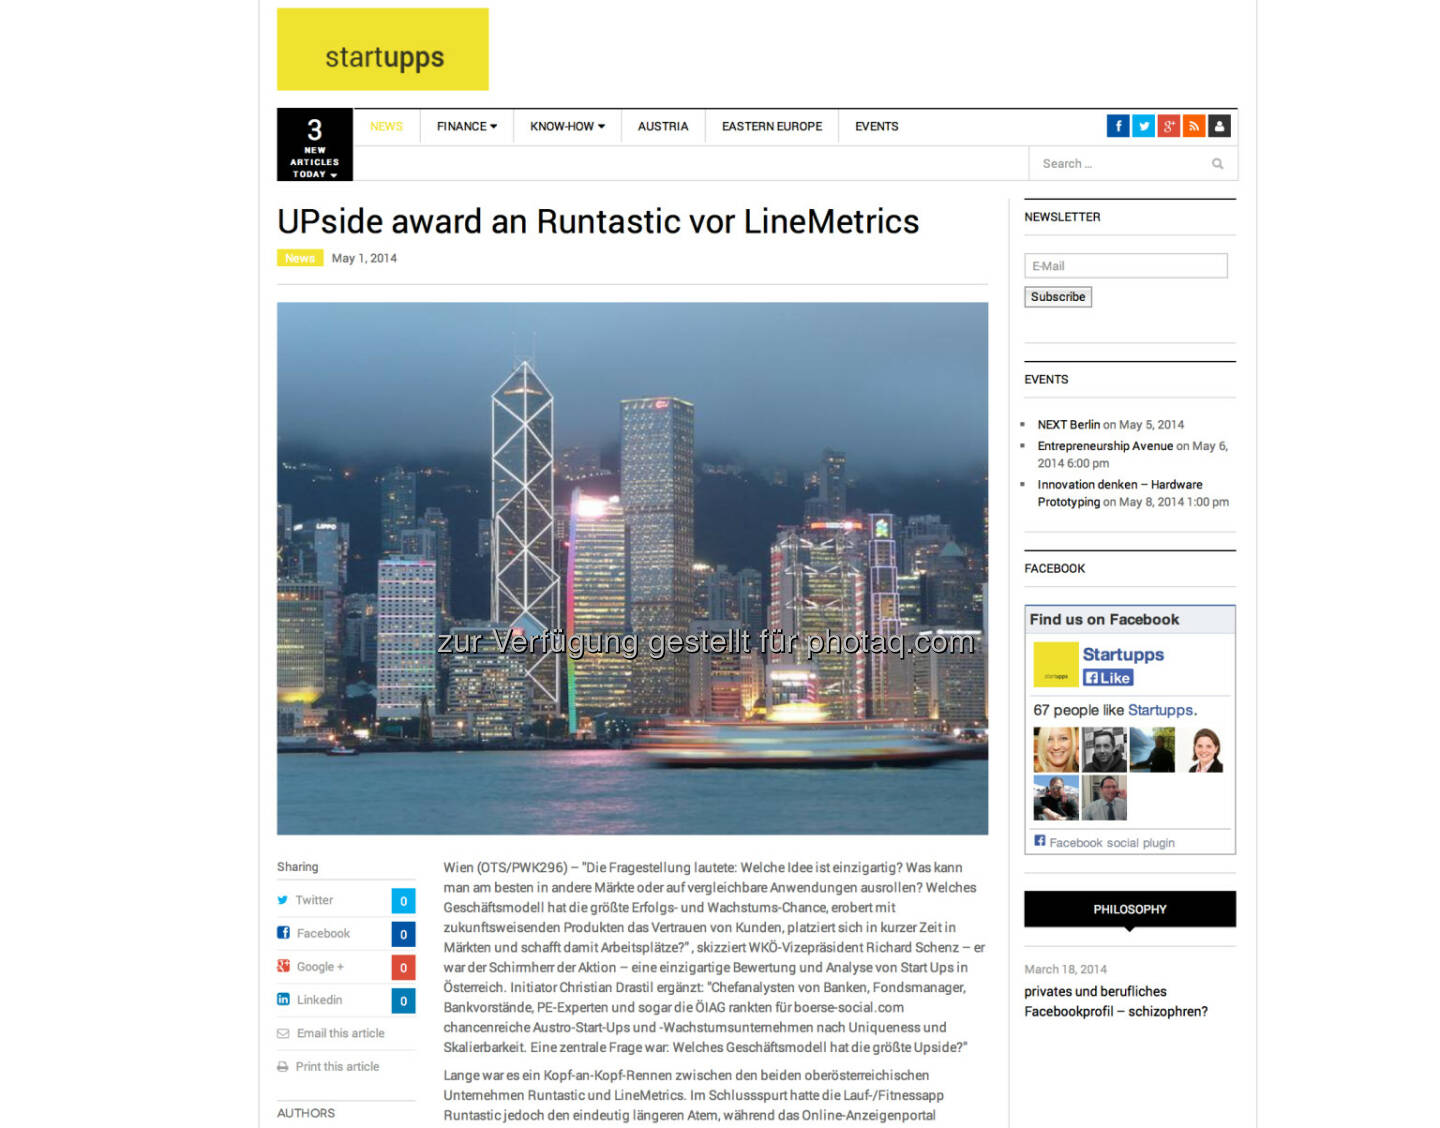 startupps.net zum UPside award http://www.startupps.net